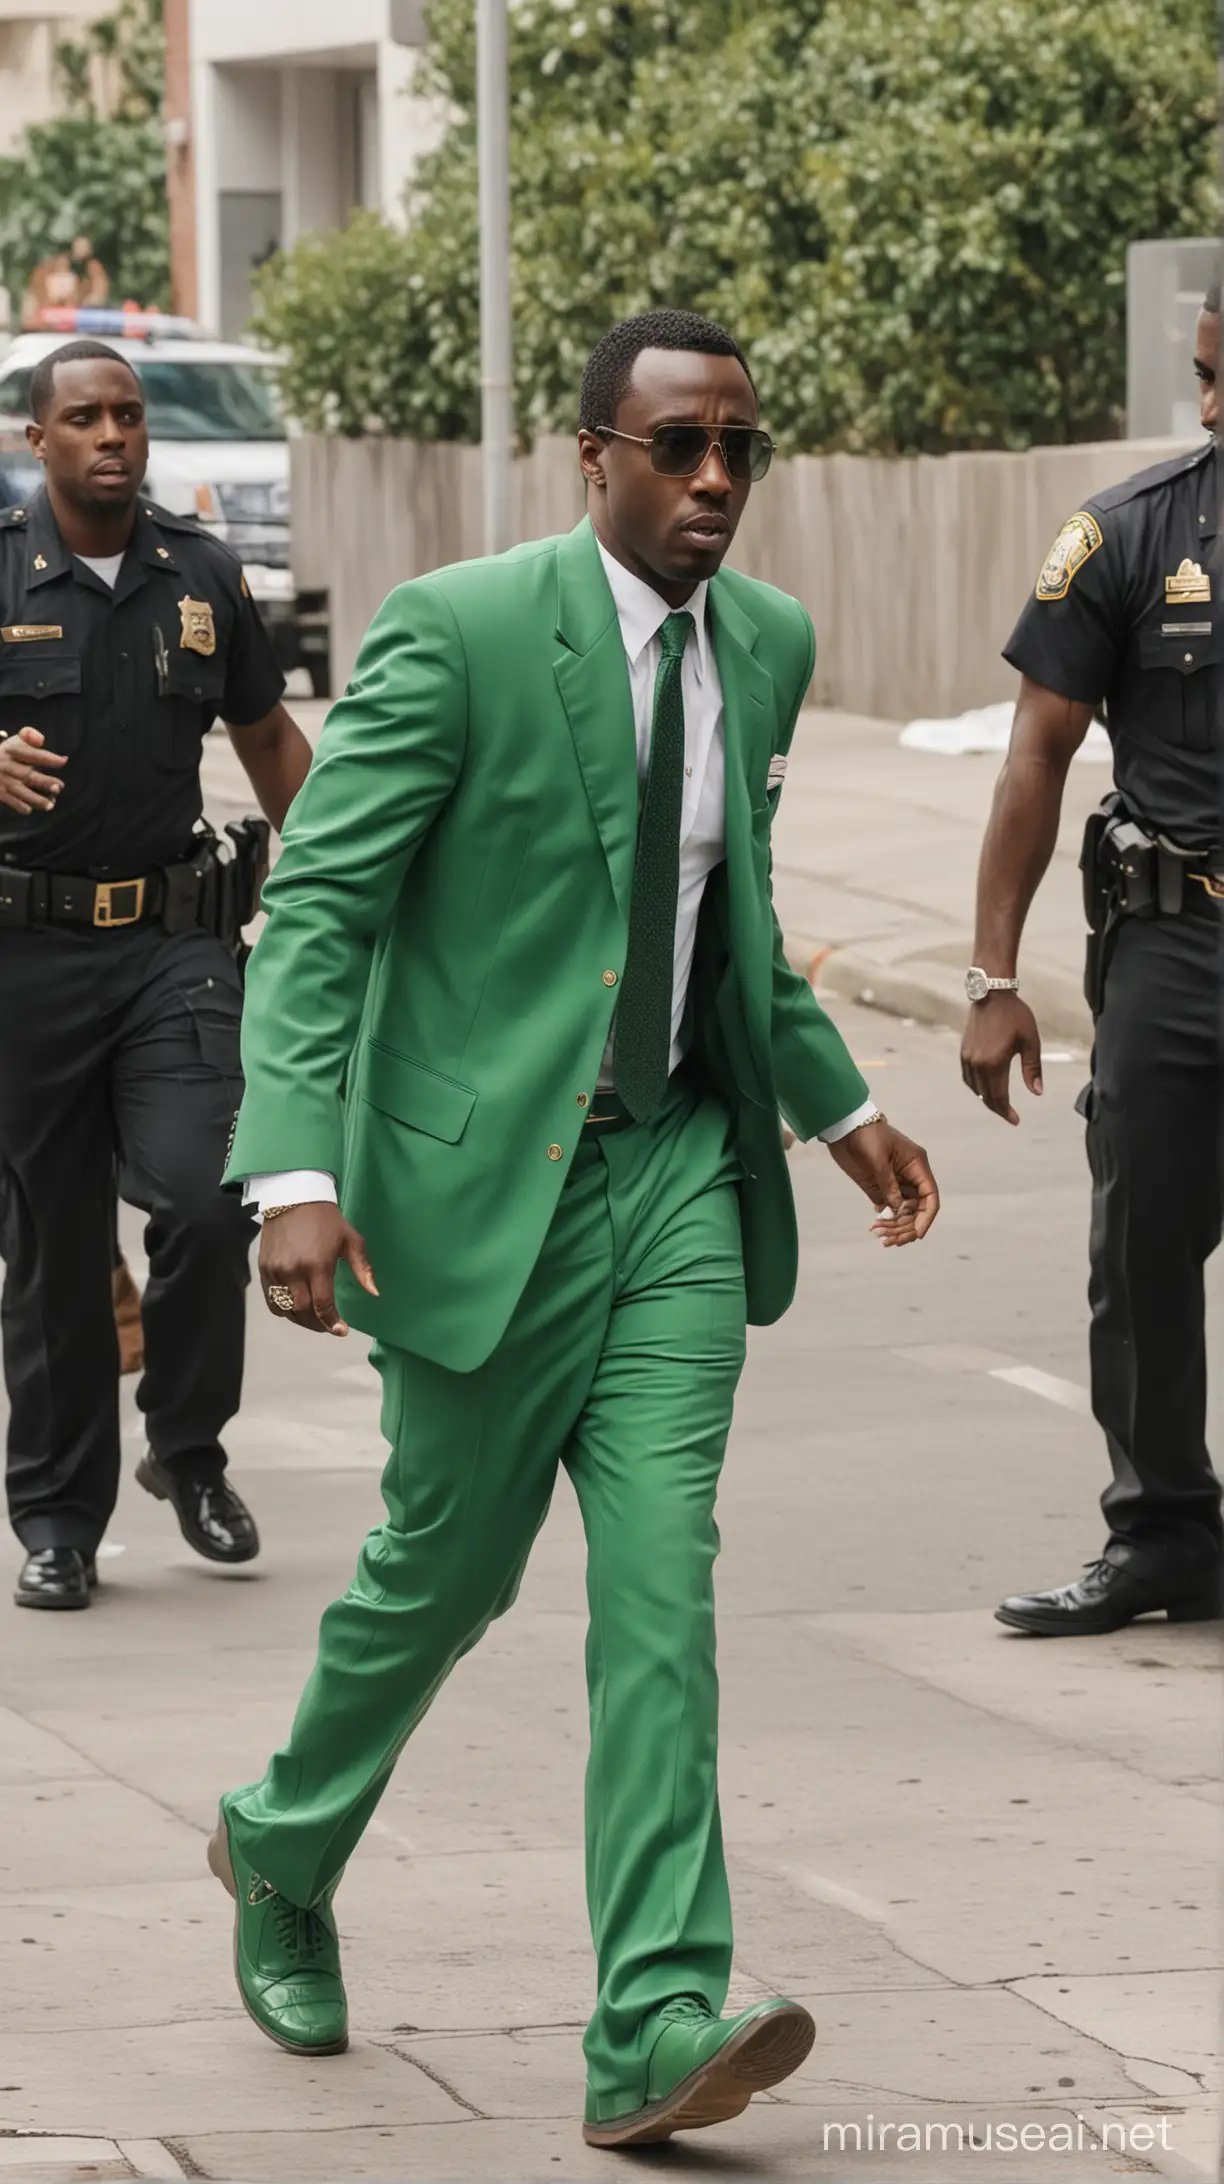 Man in Green Suit Evading Law Enforcement